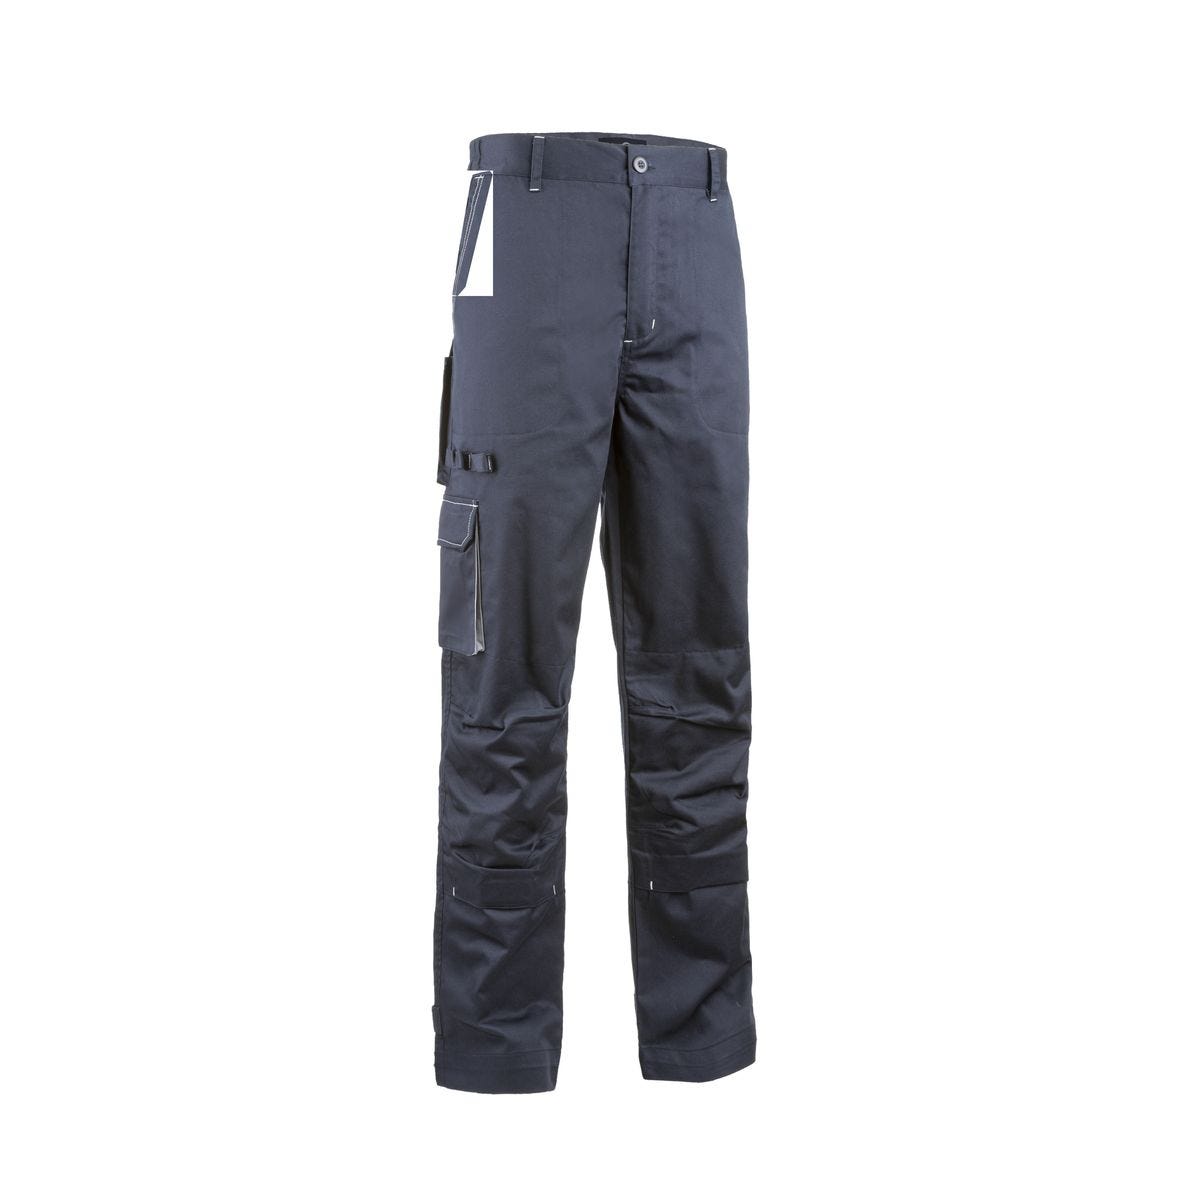 Pantalon NAVY II marine/gris - COVERGUARD - Taille XL 0